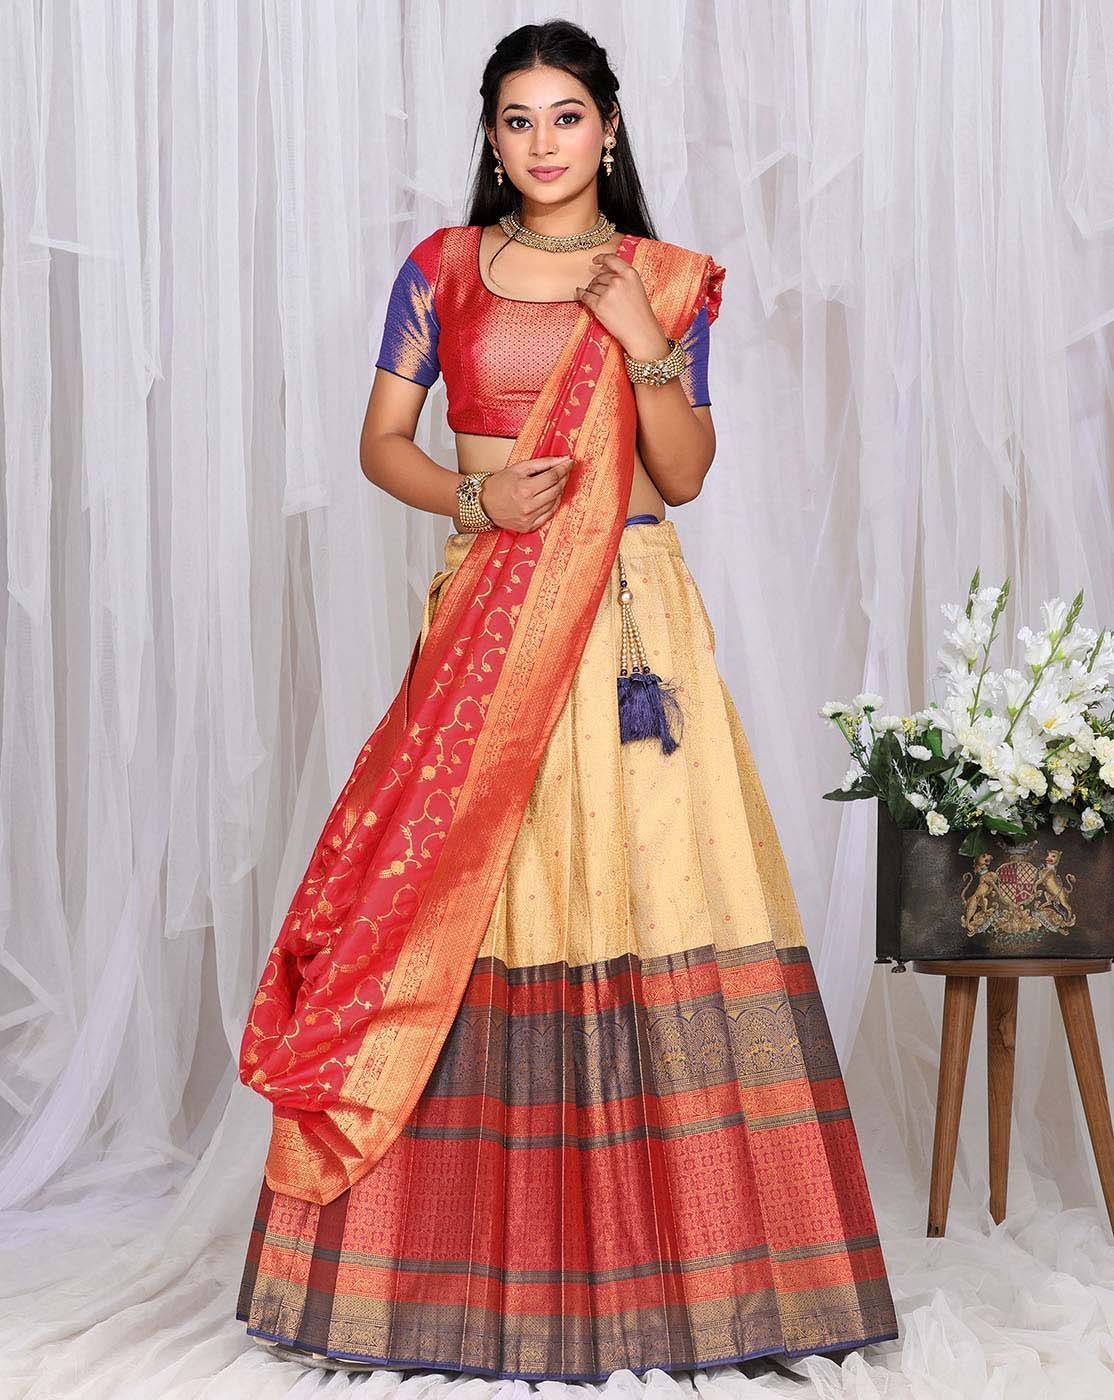 Share more than 187 red colour half saree